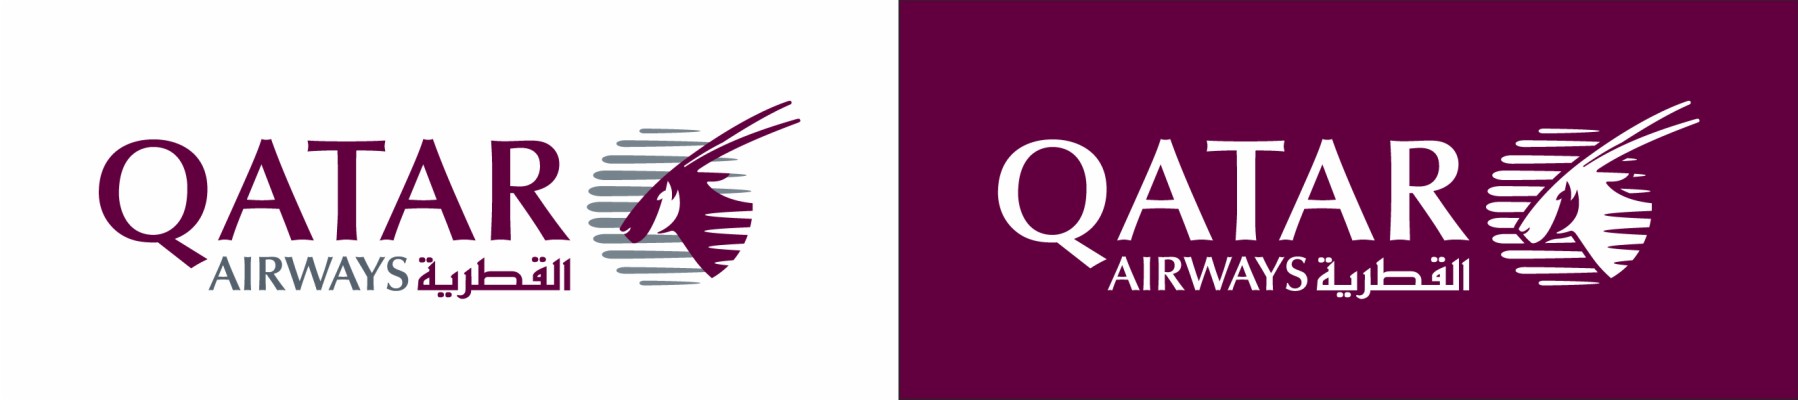 Qatar Airlines Logo Vector Wallpaper Teahub Io